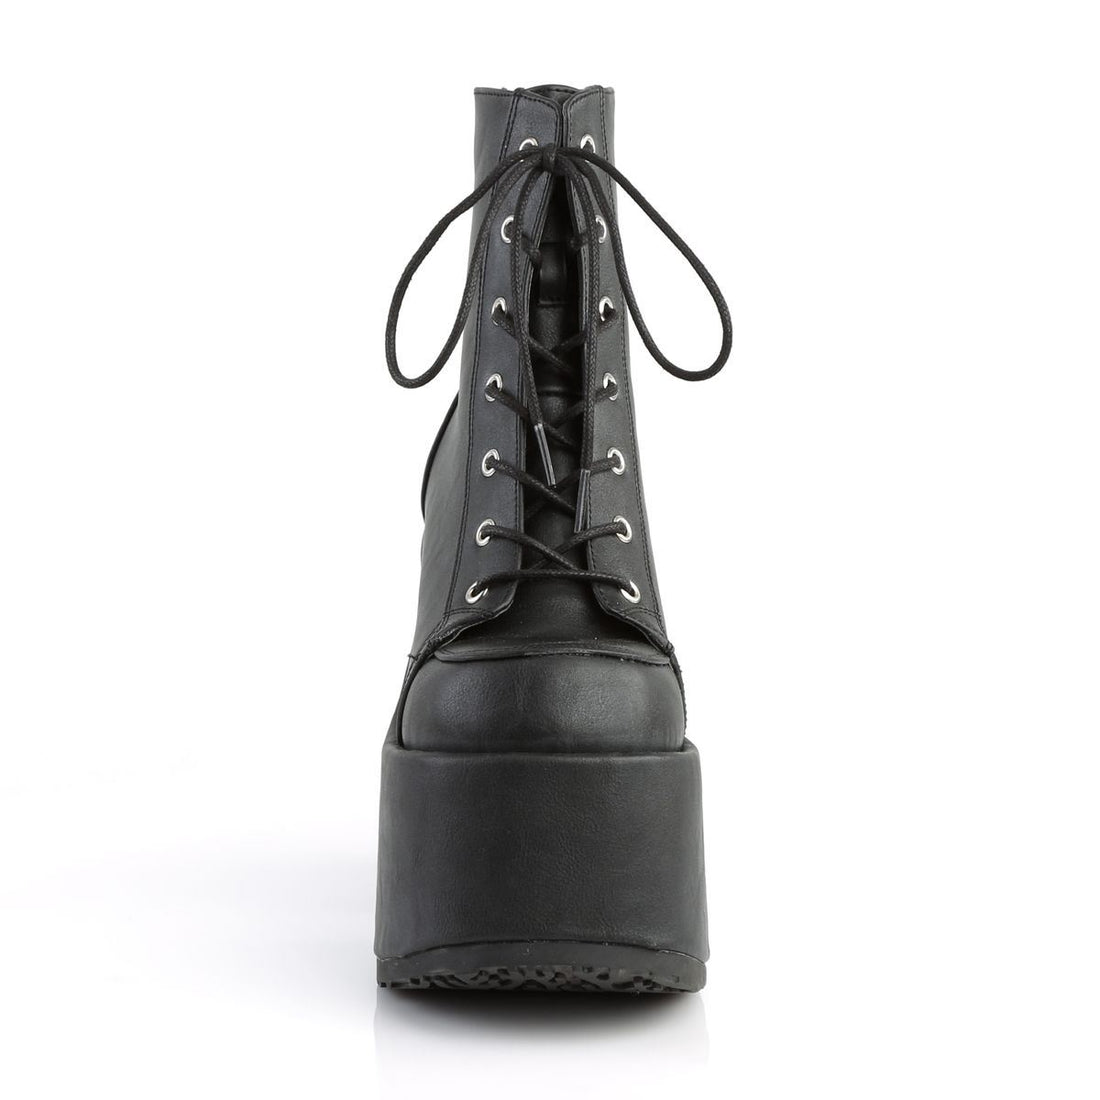 Demonia Camel 203 Black Vegan Leather Platform Ankle Boots - Upperclass Fashions 